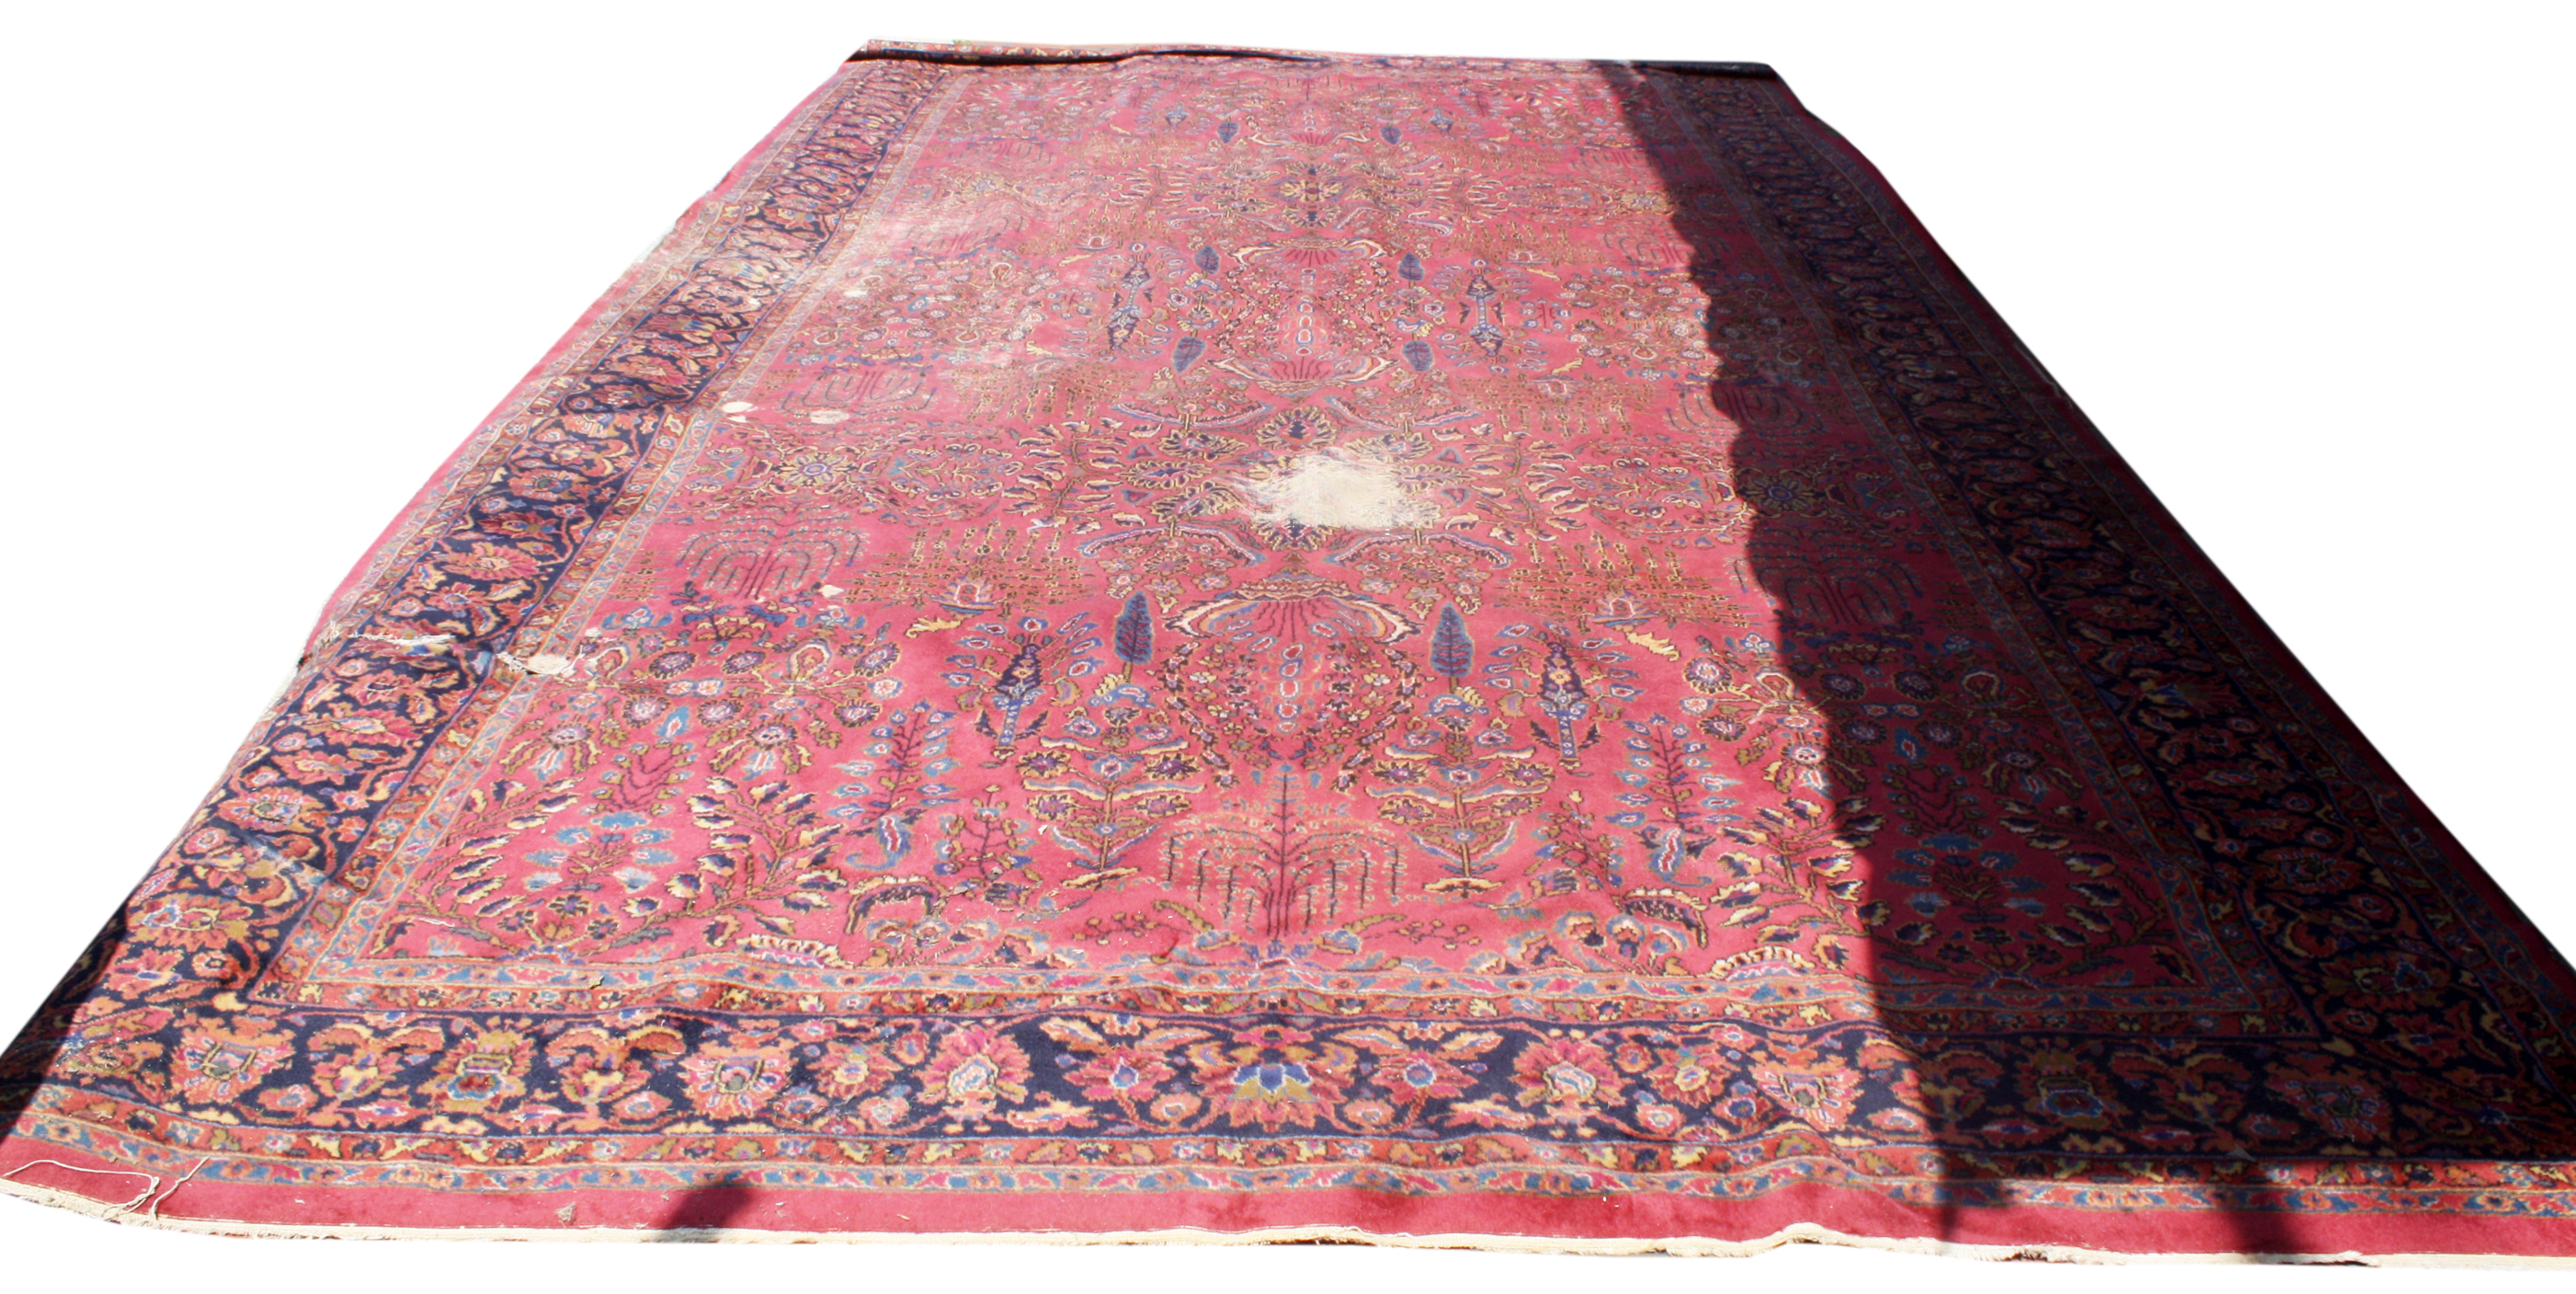 Heirloom oversized Persian Sarouk area rug